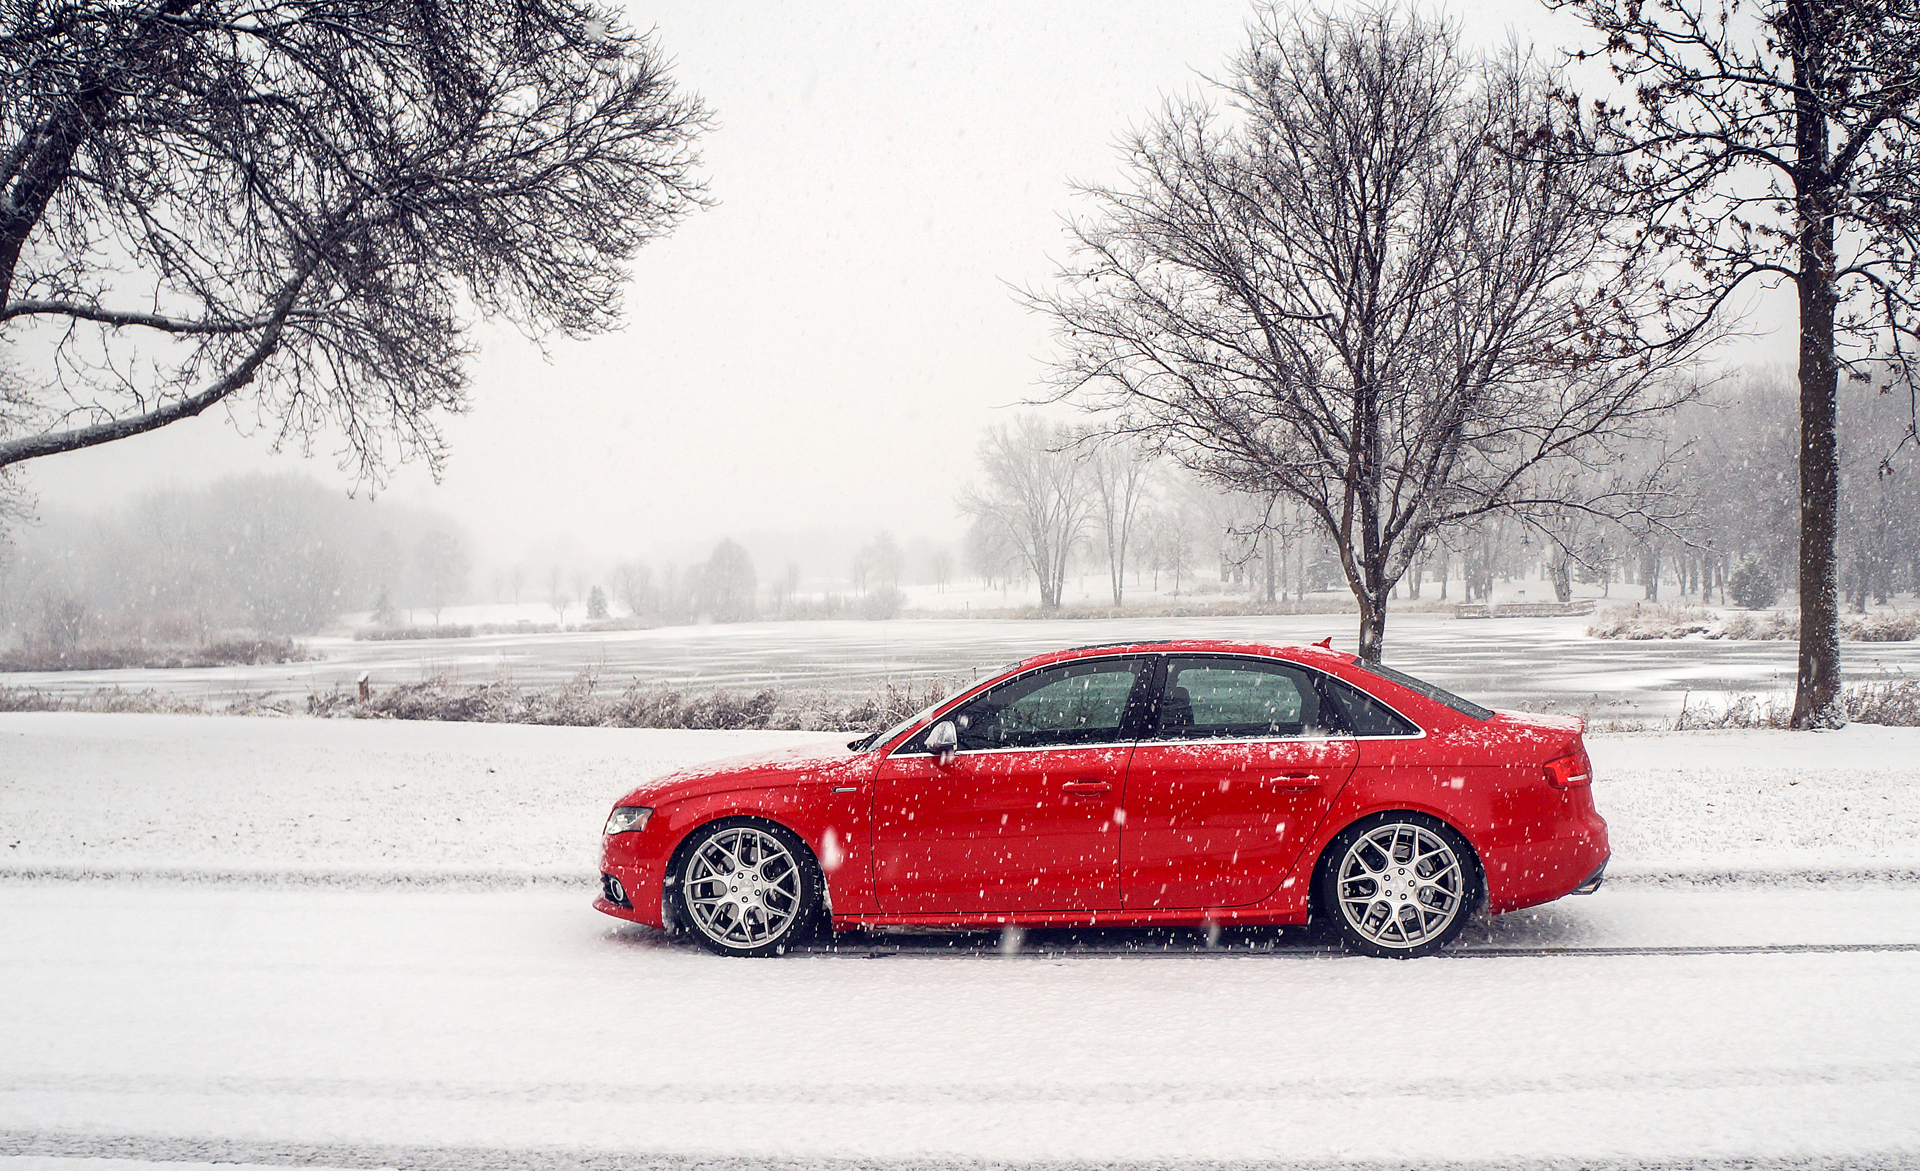 Audi S4 Audi Luxury Car Car Vehicle Red Car Winter Snow Snowfall 1920x1171